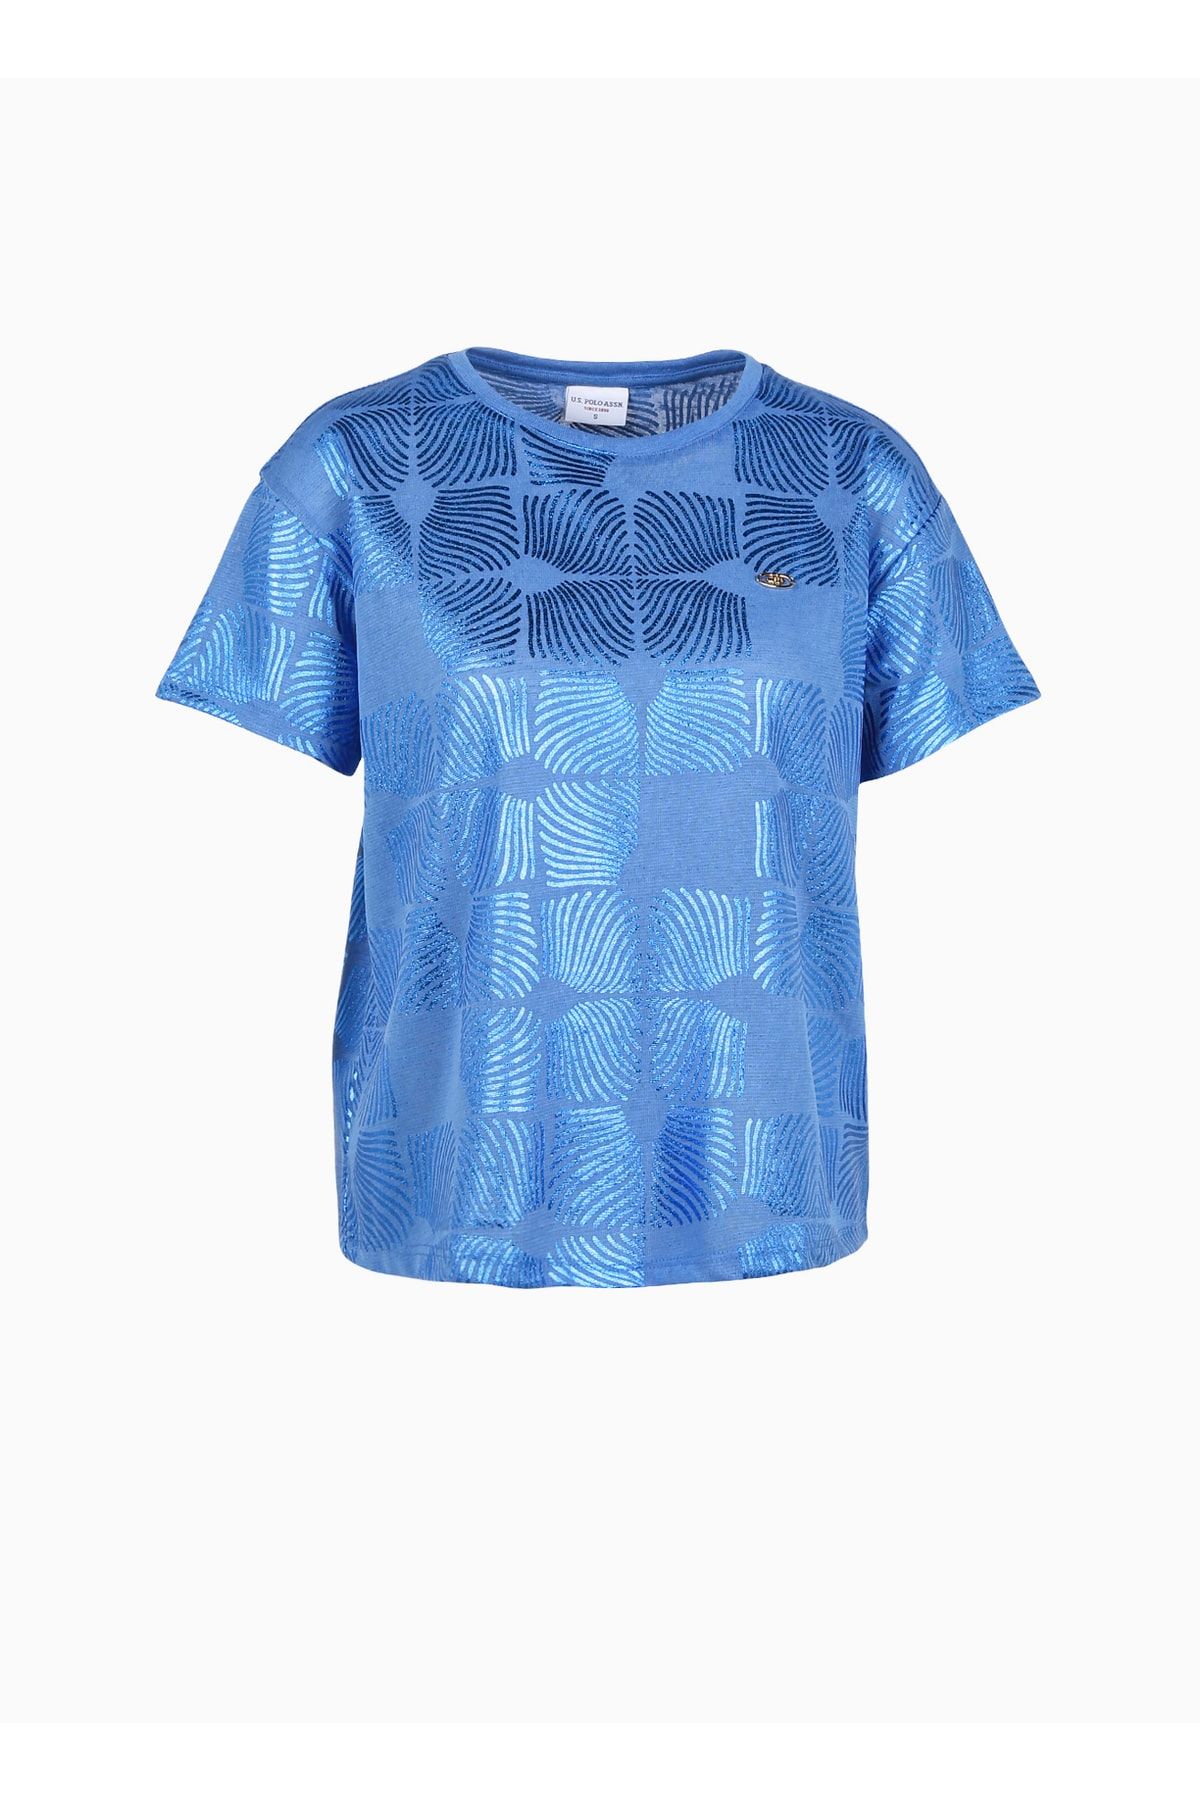 U.S. Polo Assn. T-shirt, Xs, Mavi